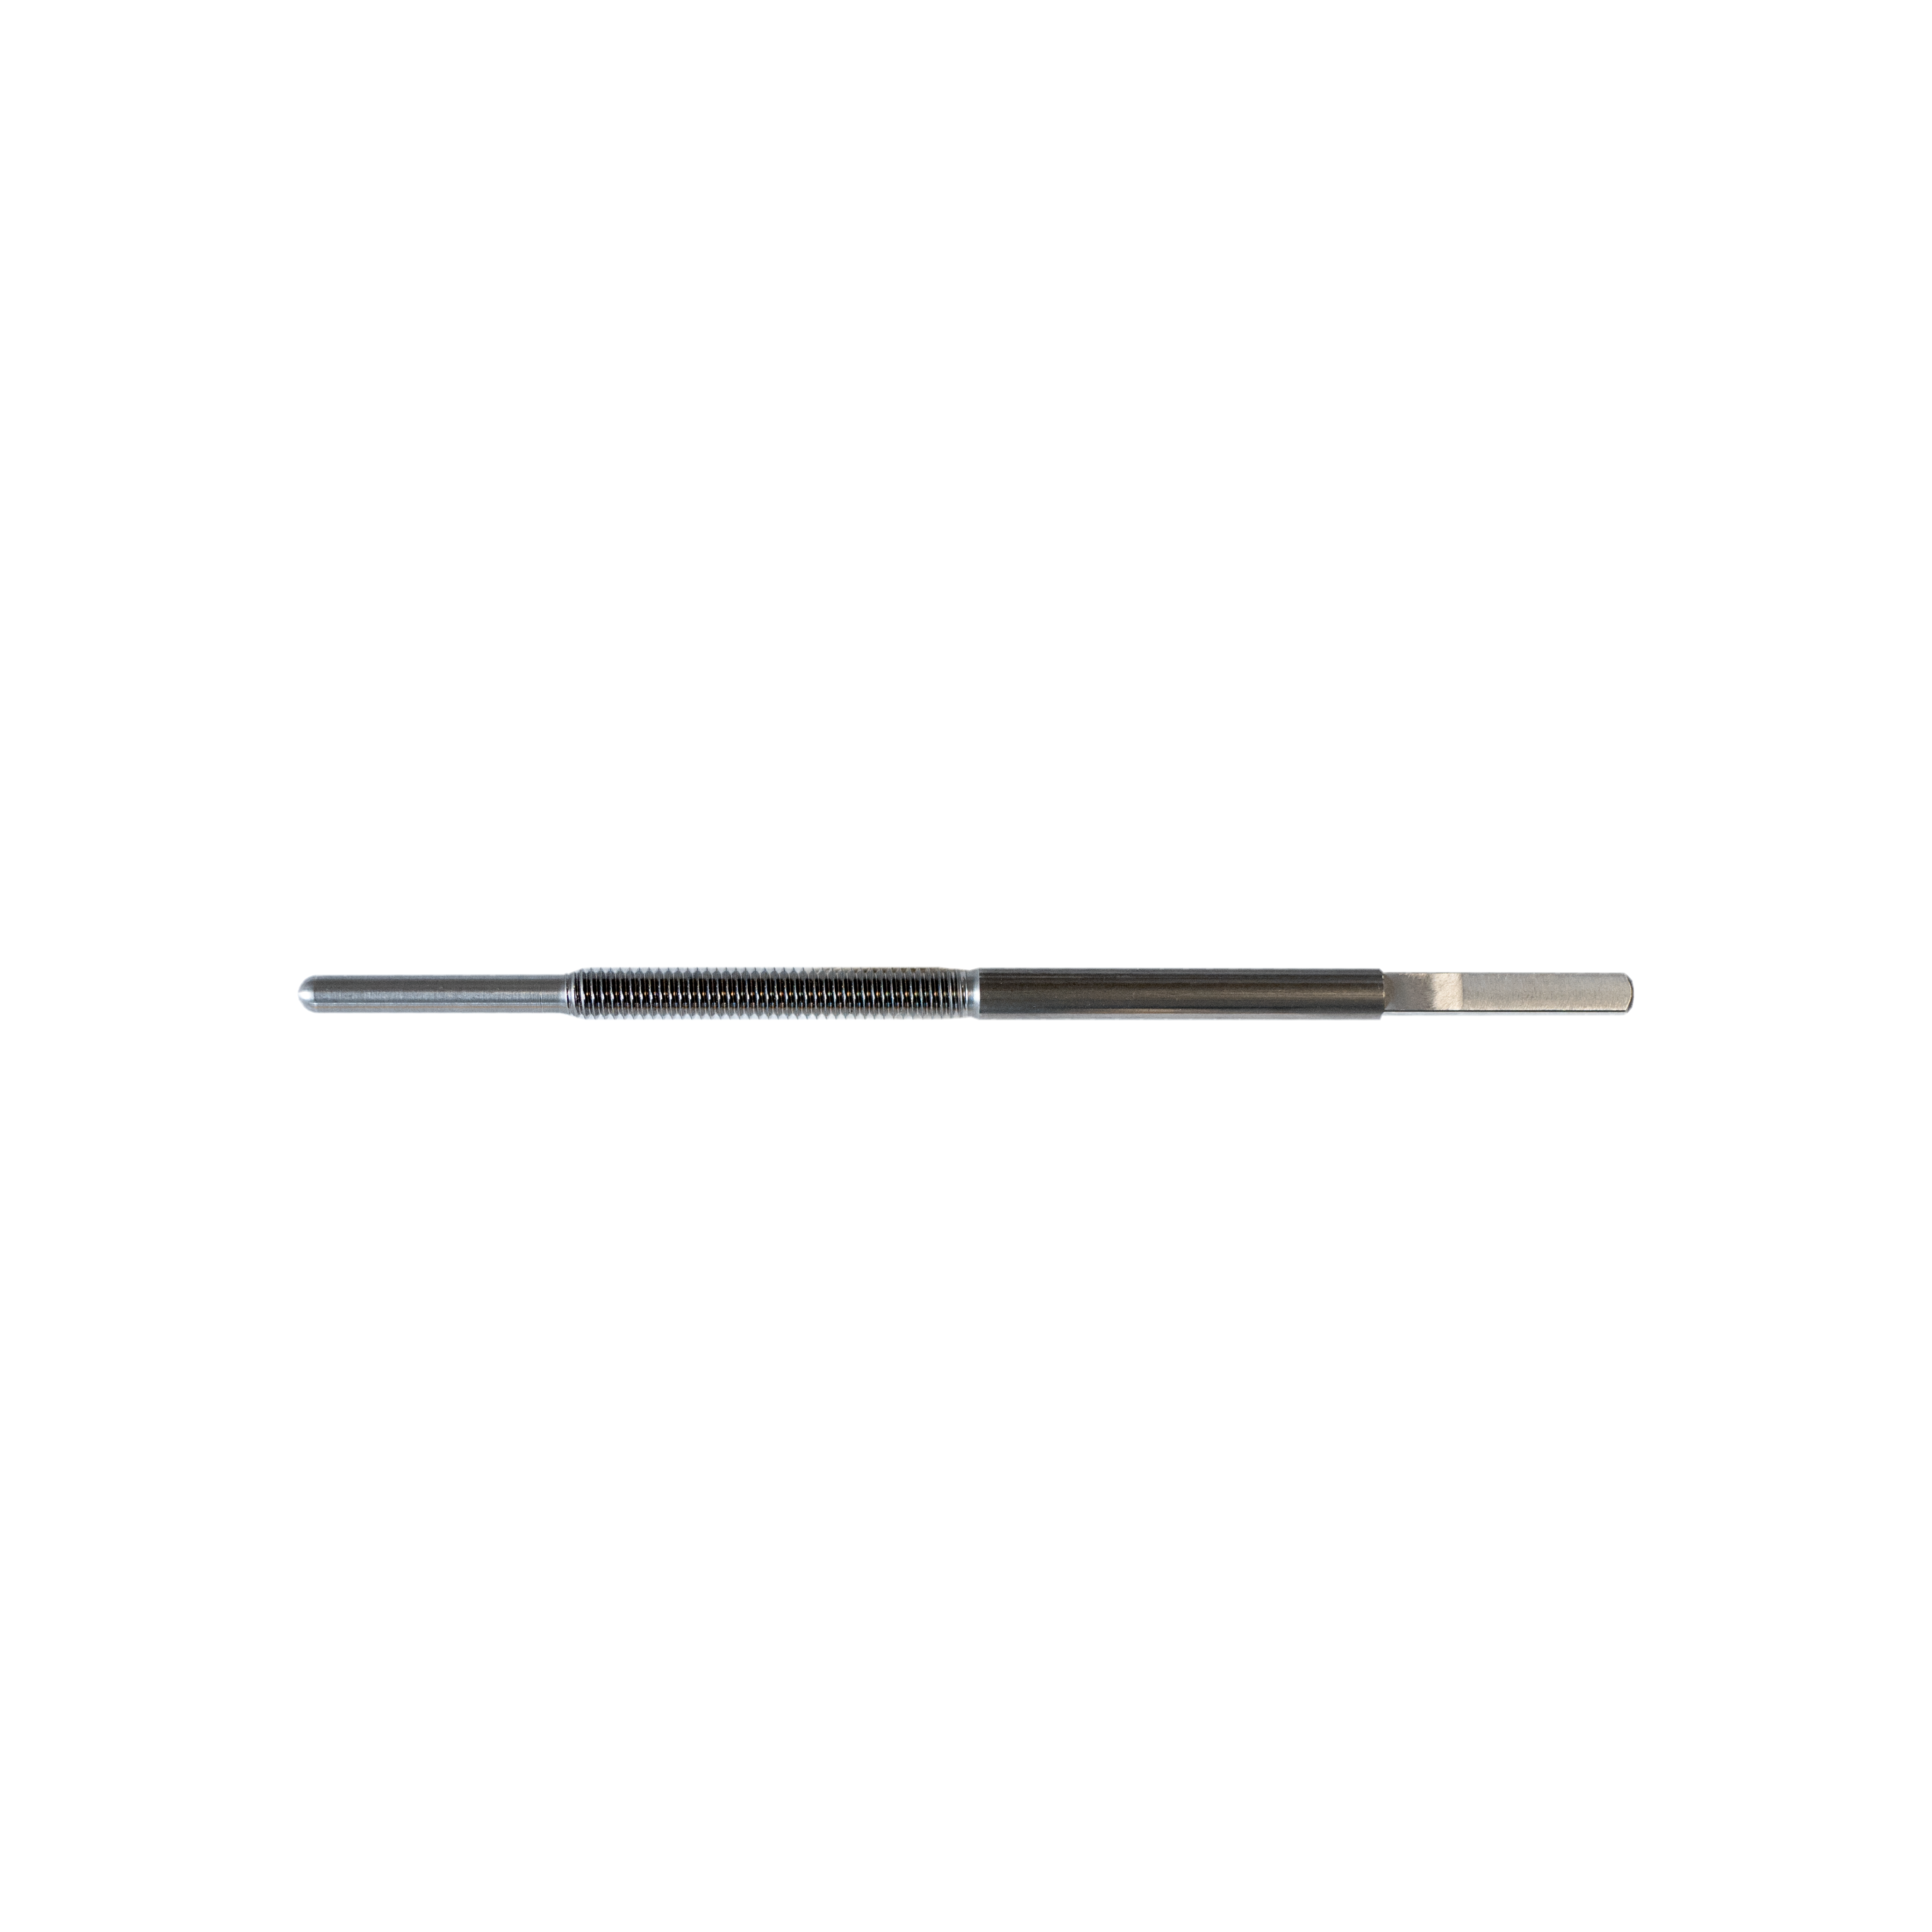 Metric thread 4 mm, Bass screws, Steel